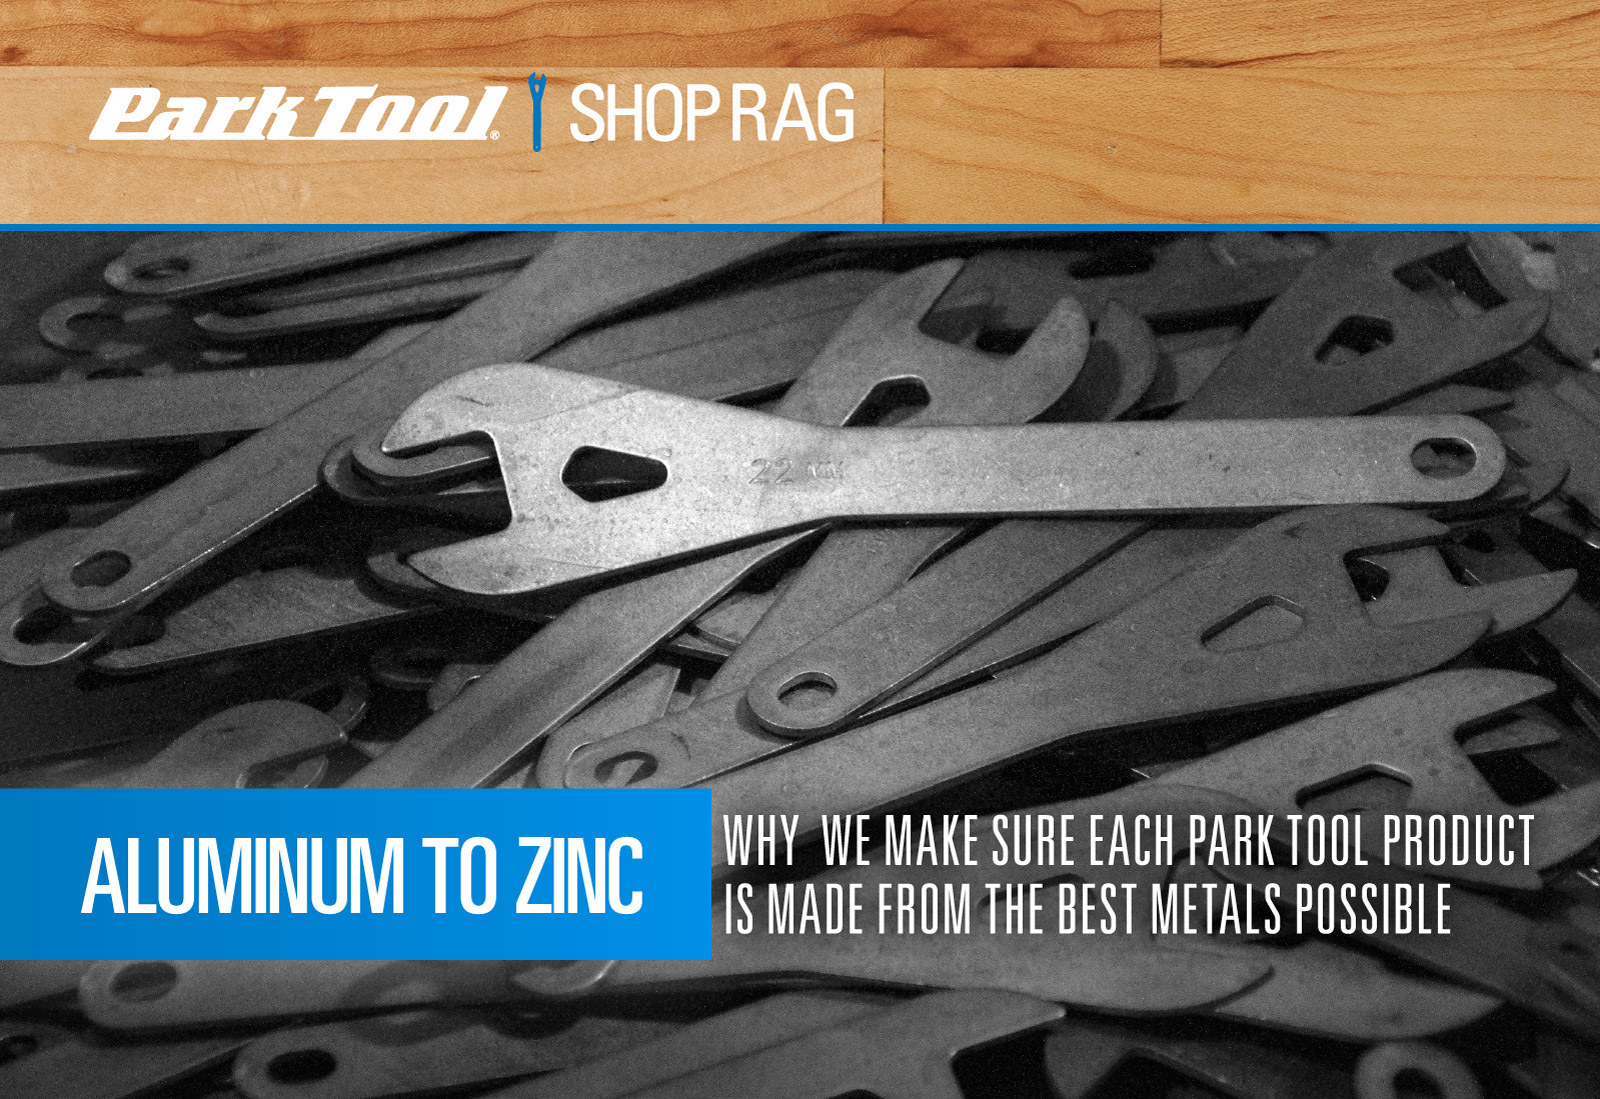 Title graphic for aluminum to zinc